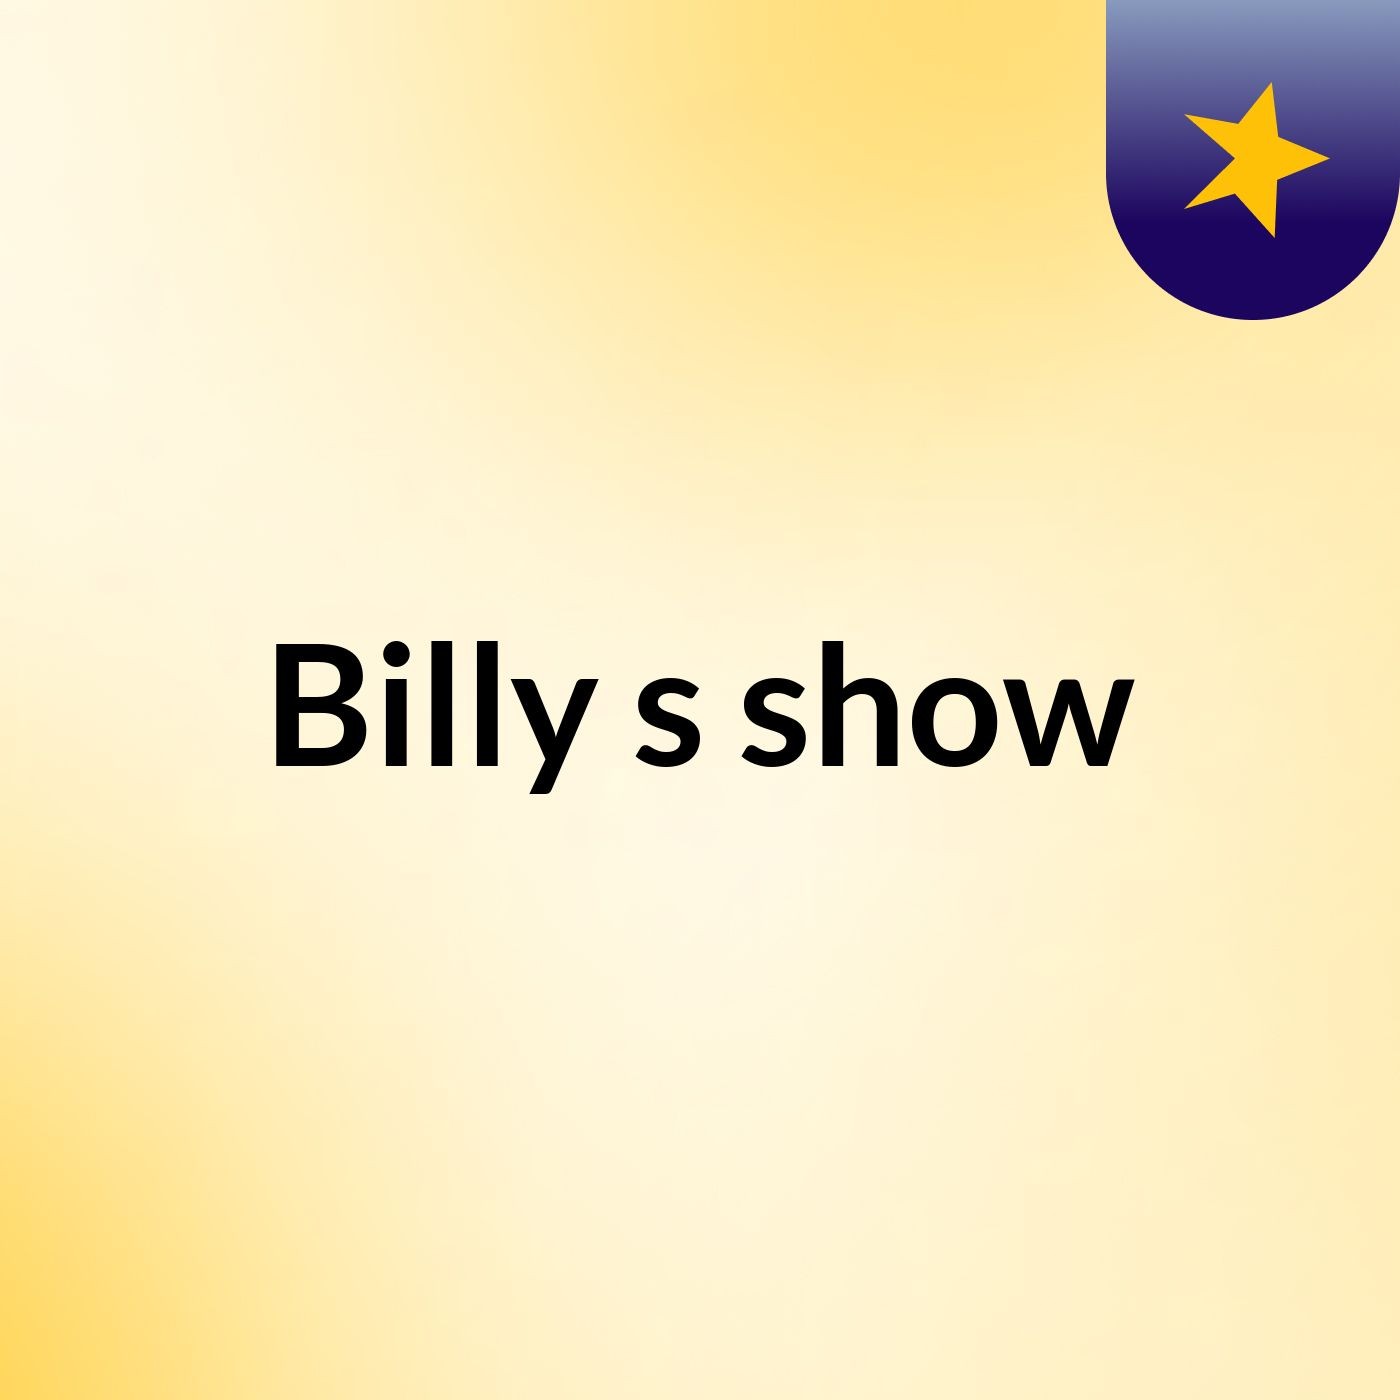 Billy's show